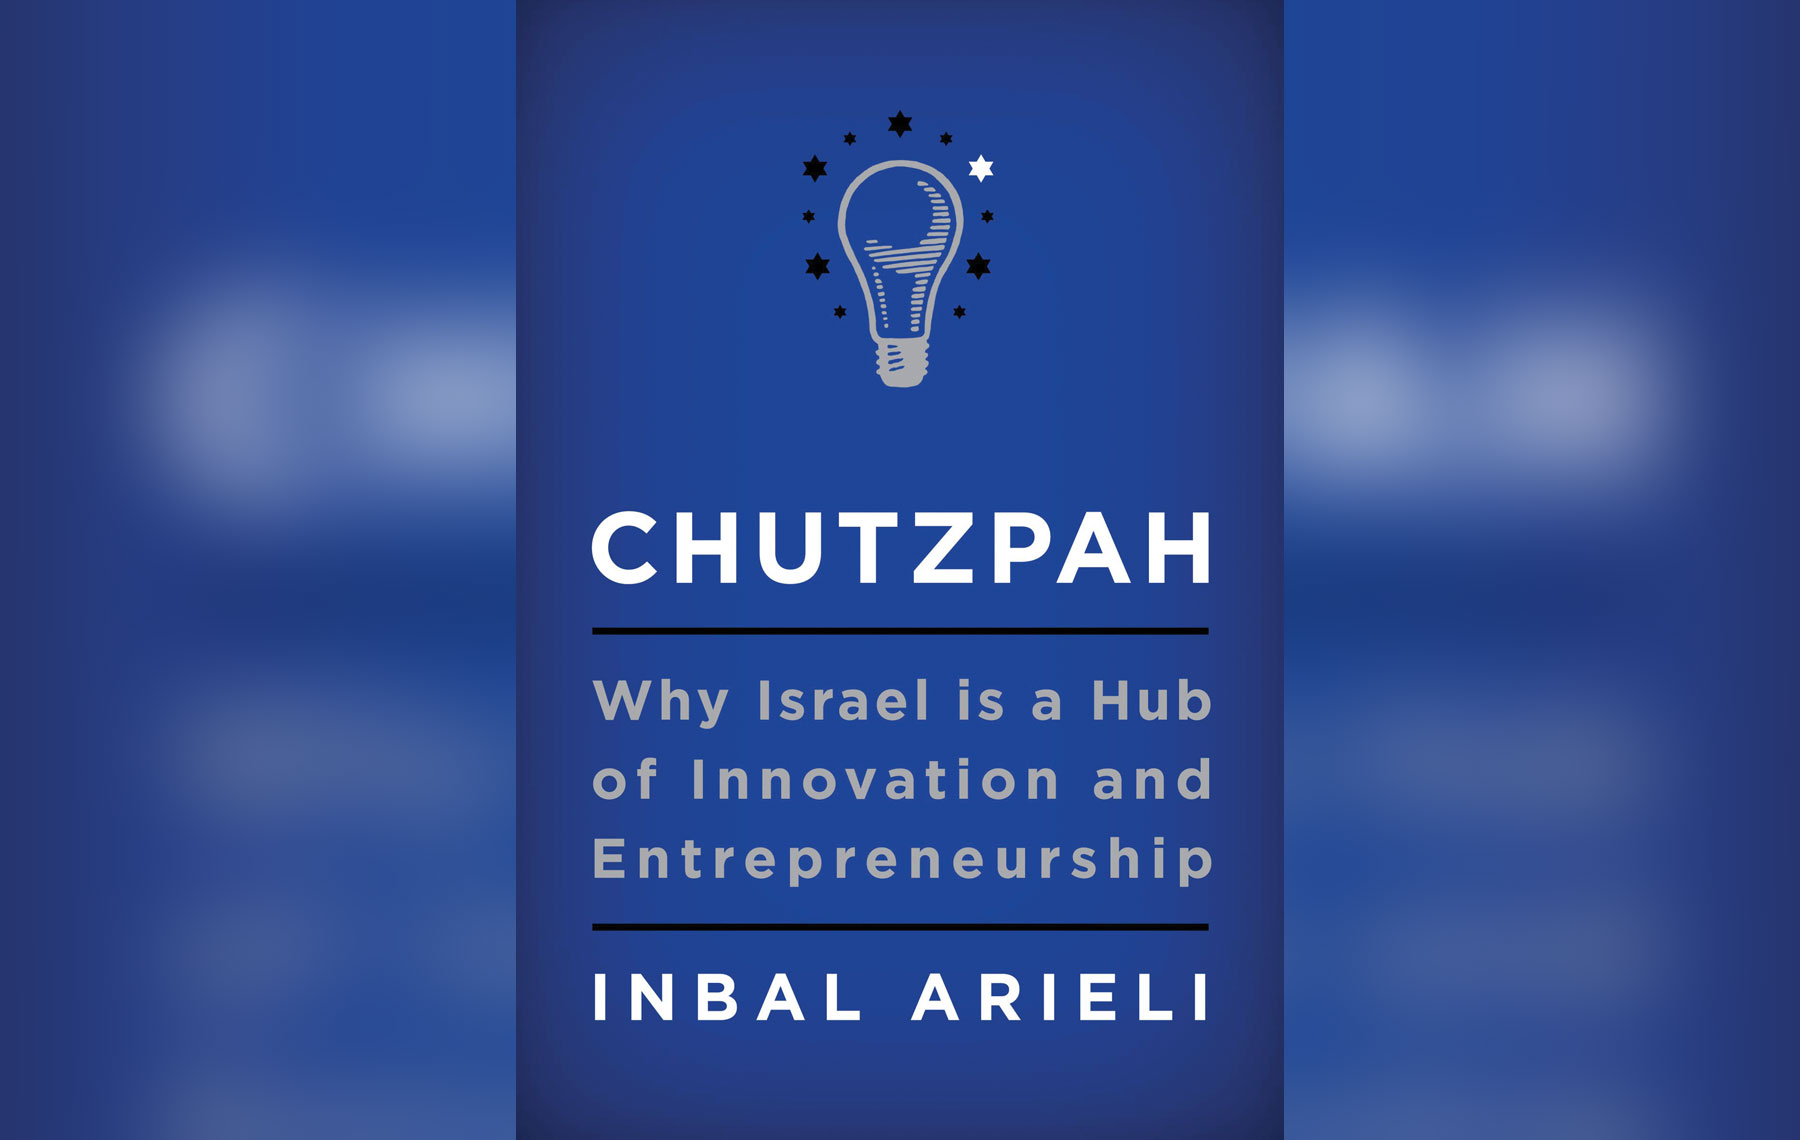 Chutzpah' Explains Israel's Spirit of Innovation